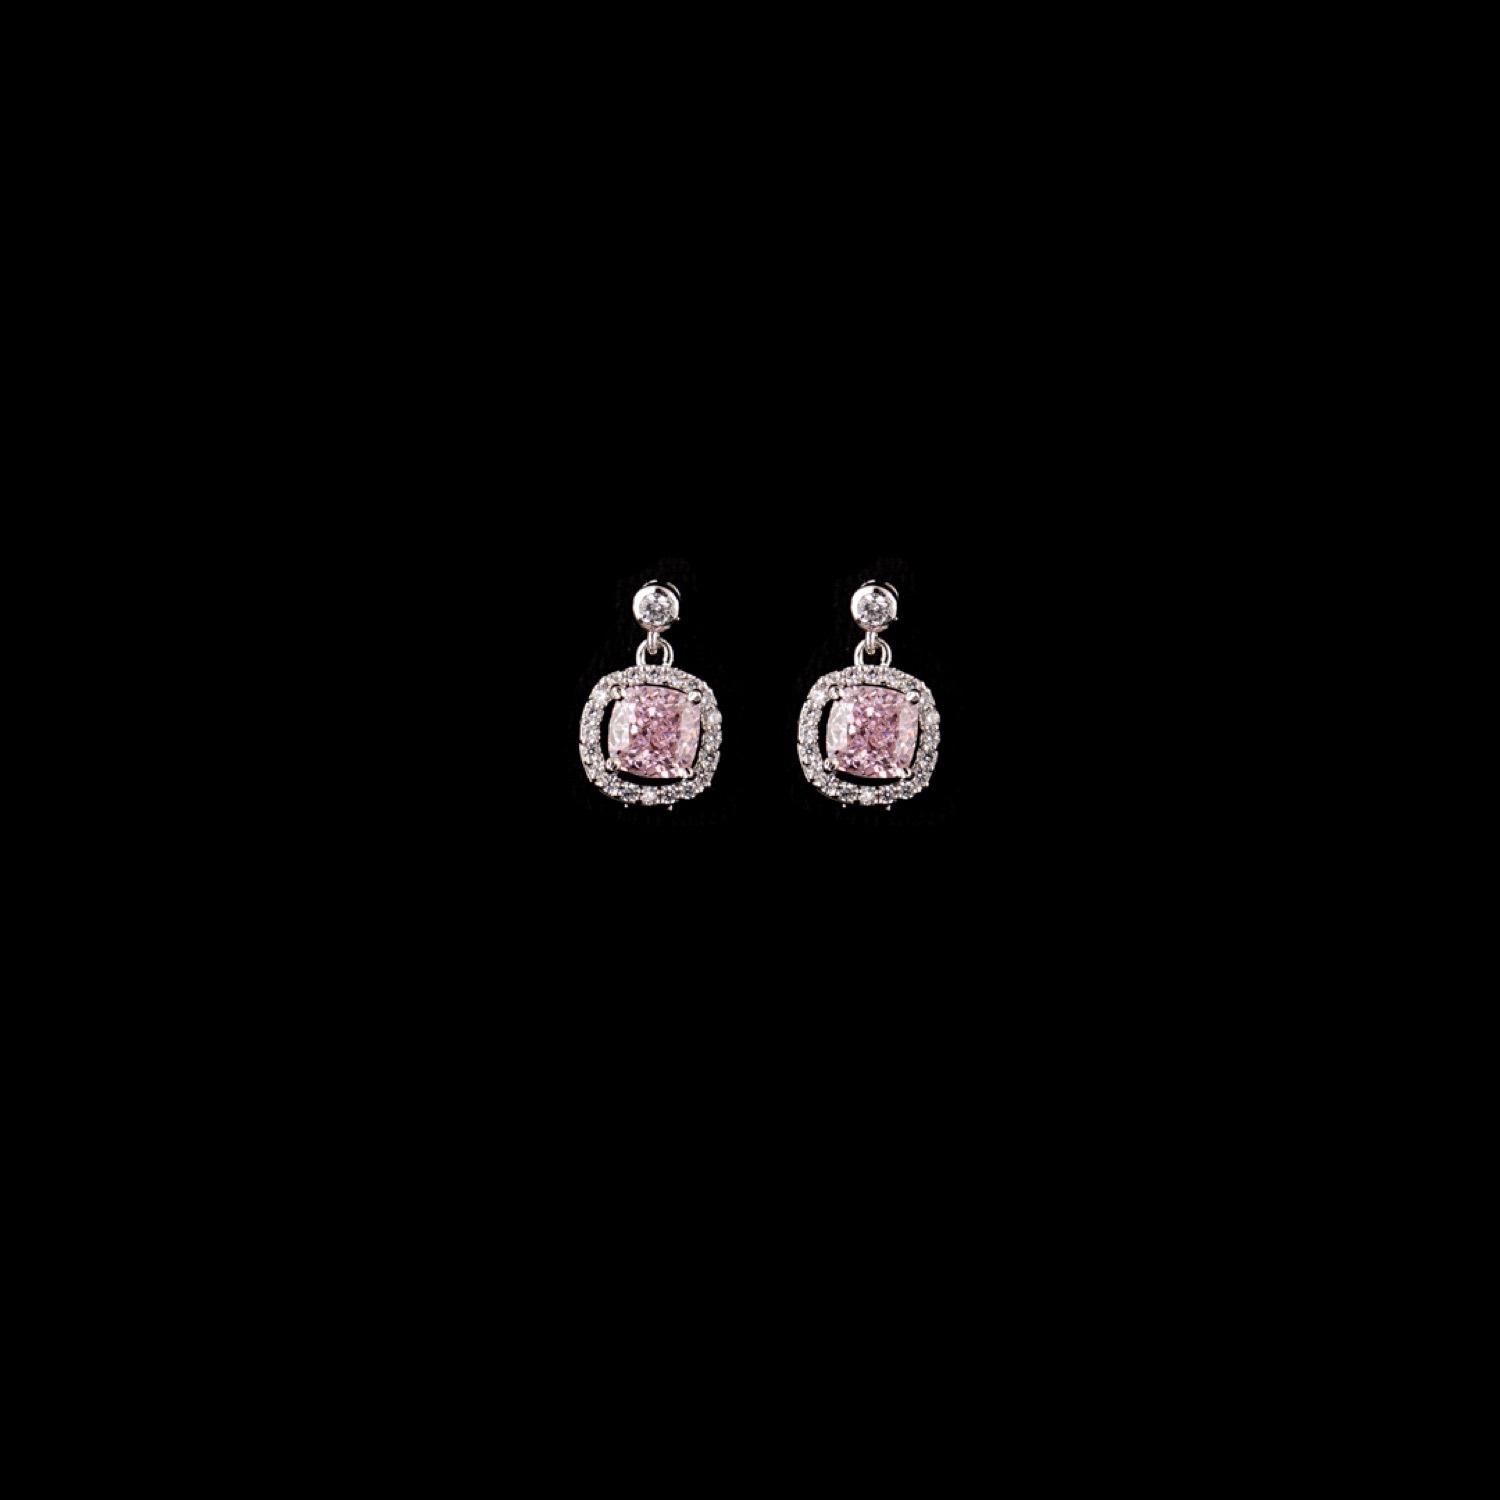 varam_earrings_102022_cushion_cut_light_pink_stone_dangler_silver_earrings-1